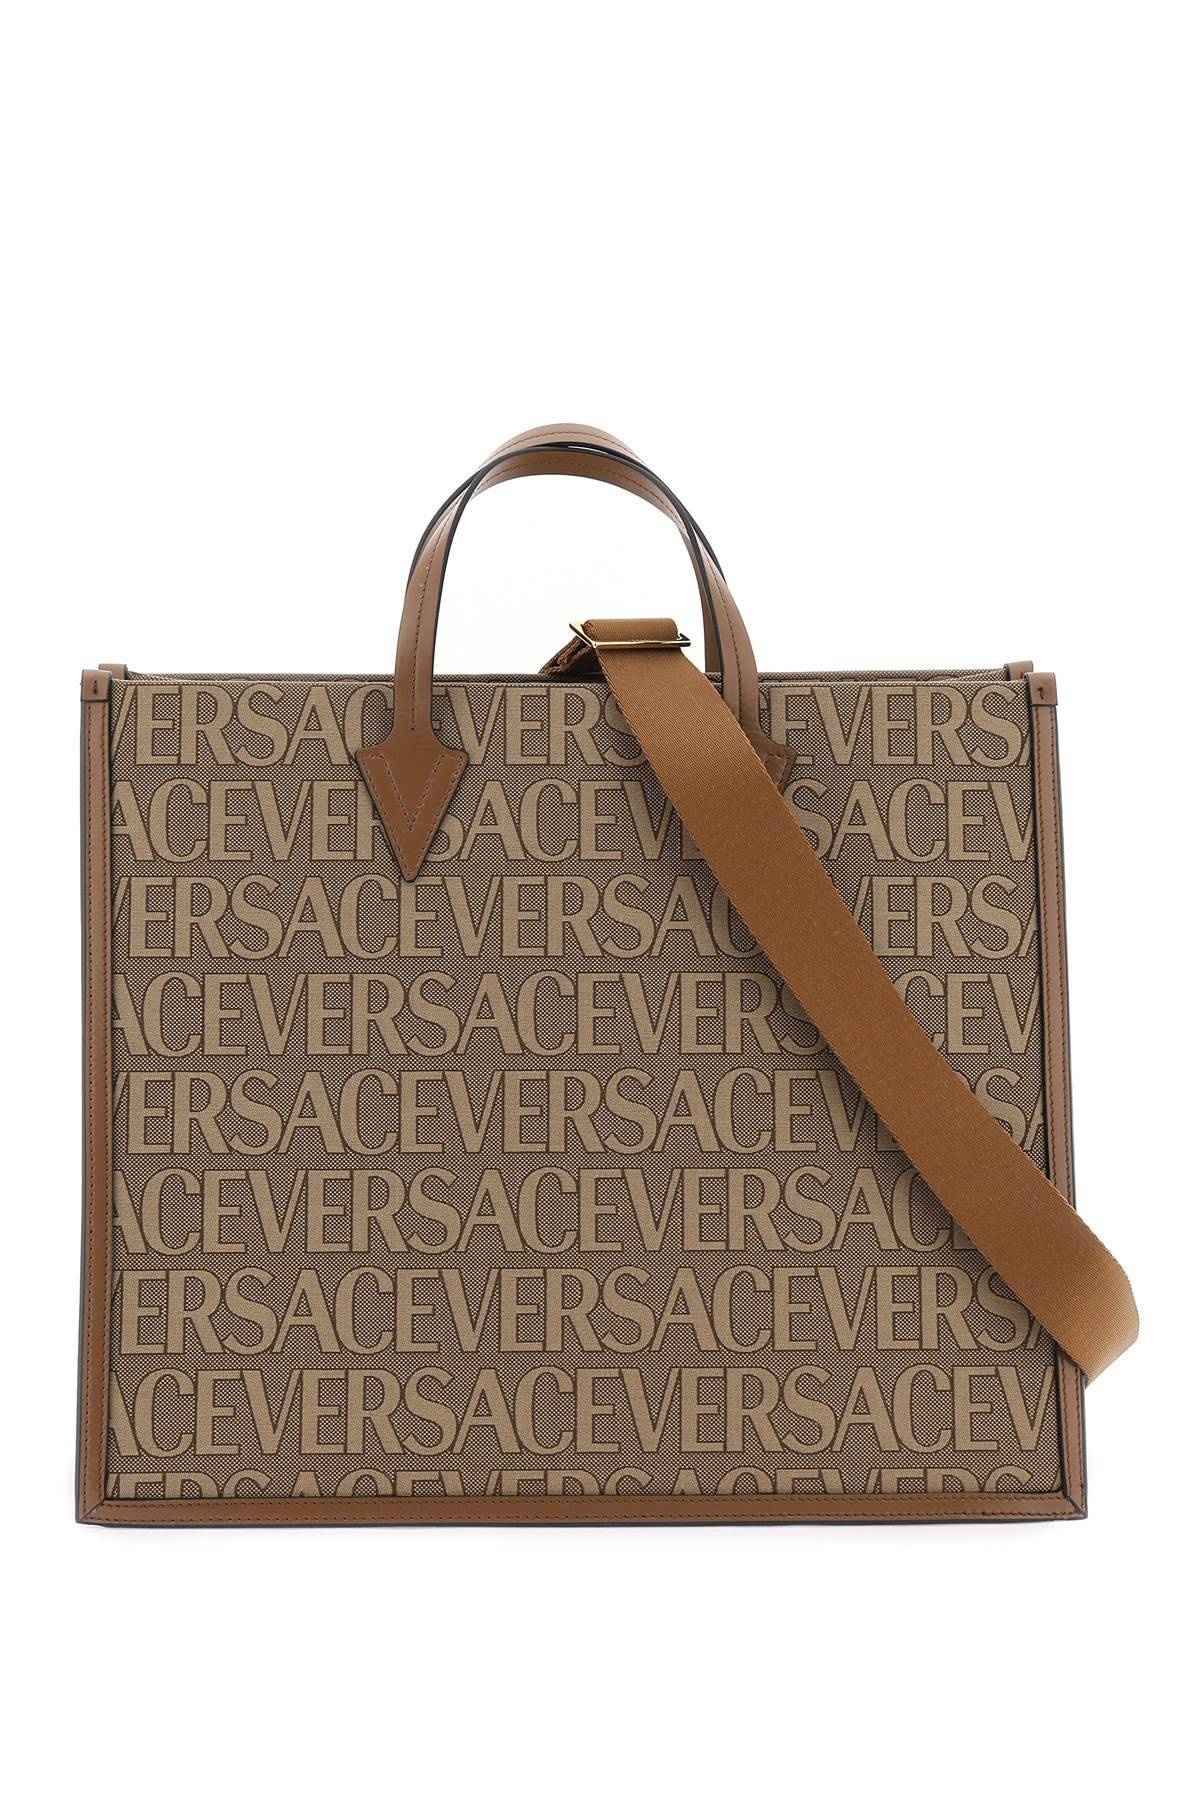 Versace VERSACE versace allover shopper bag